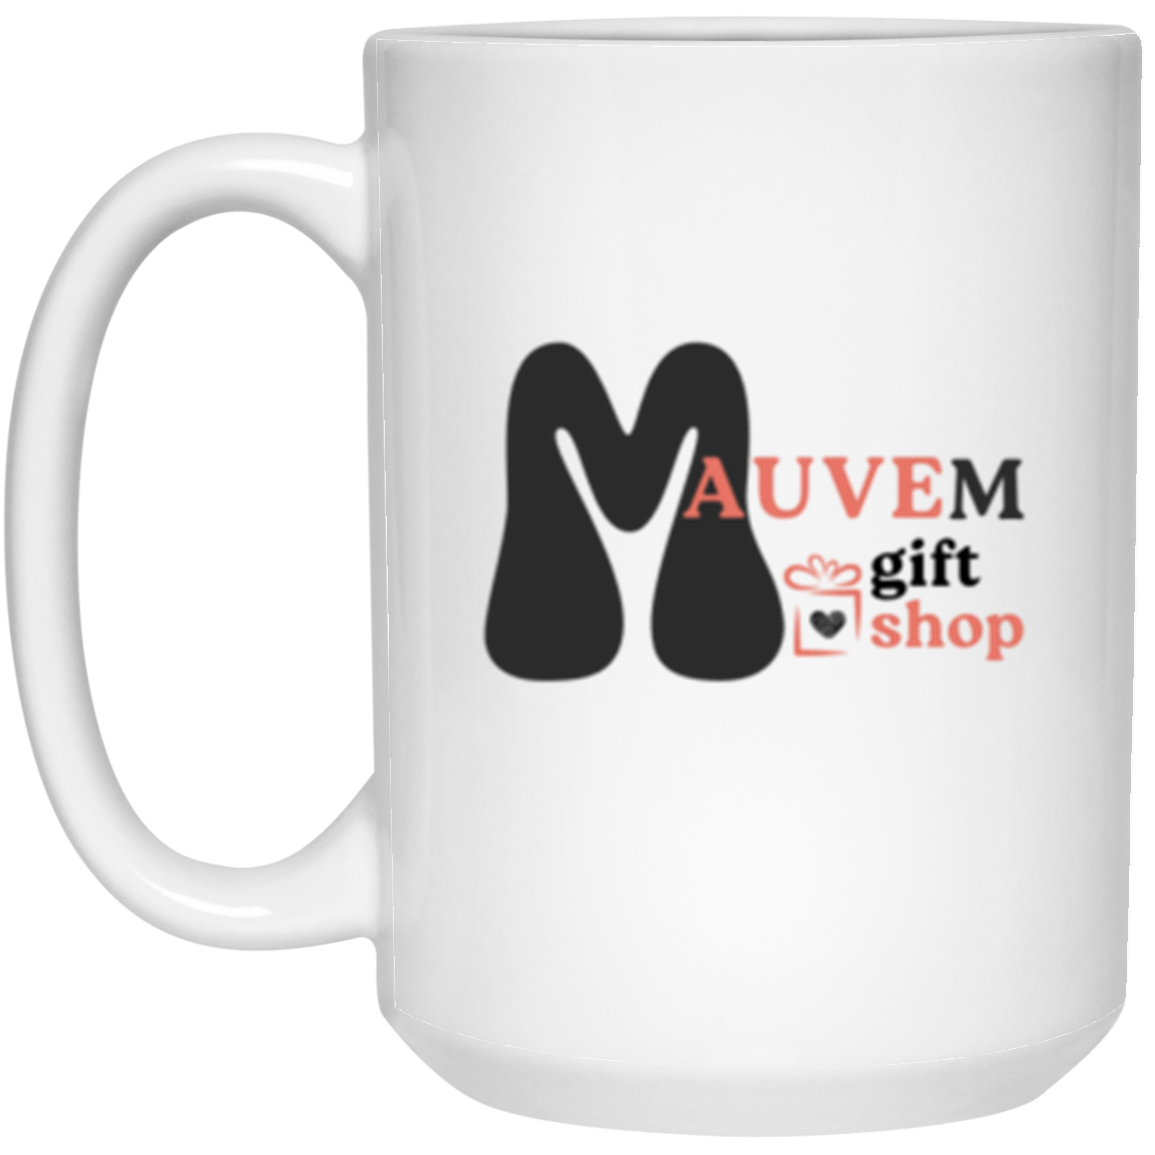 MauveM | Sip/Support Mug